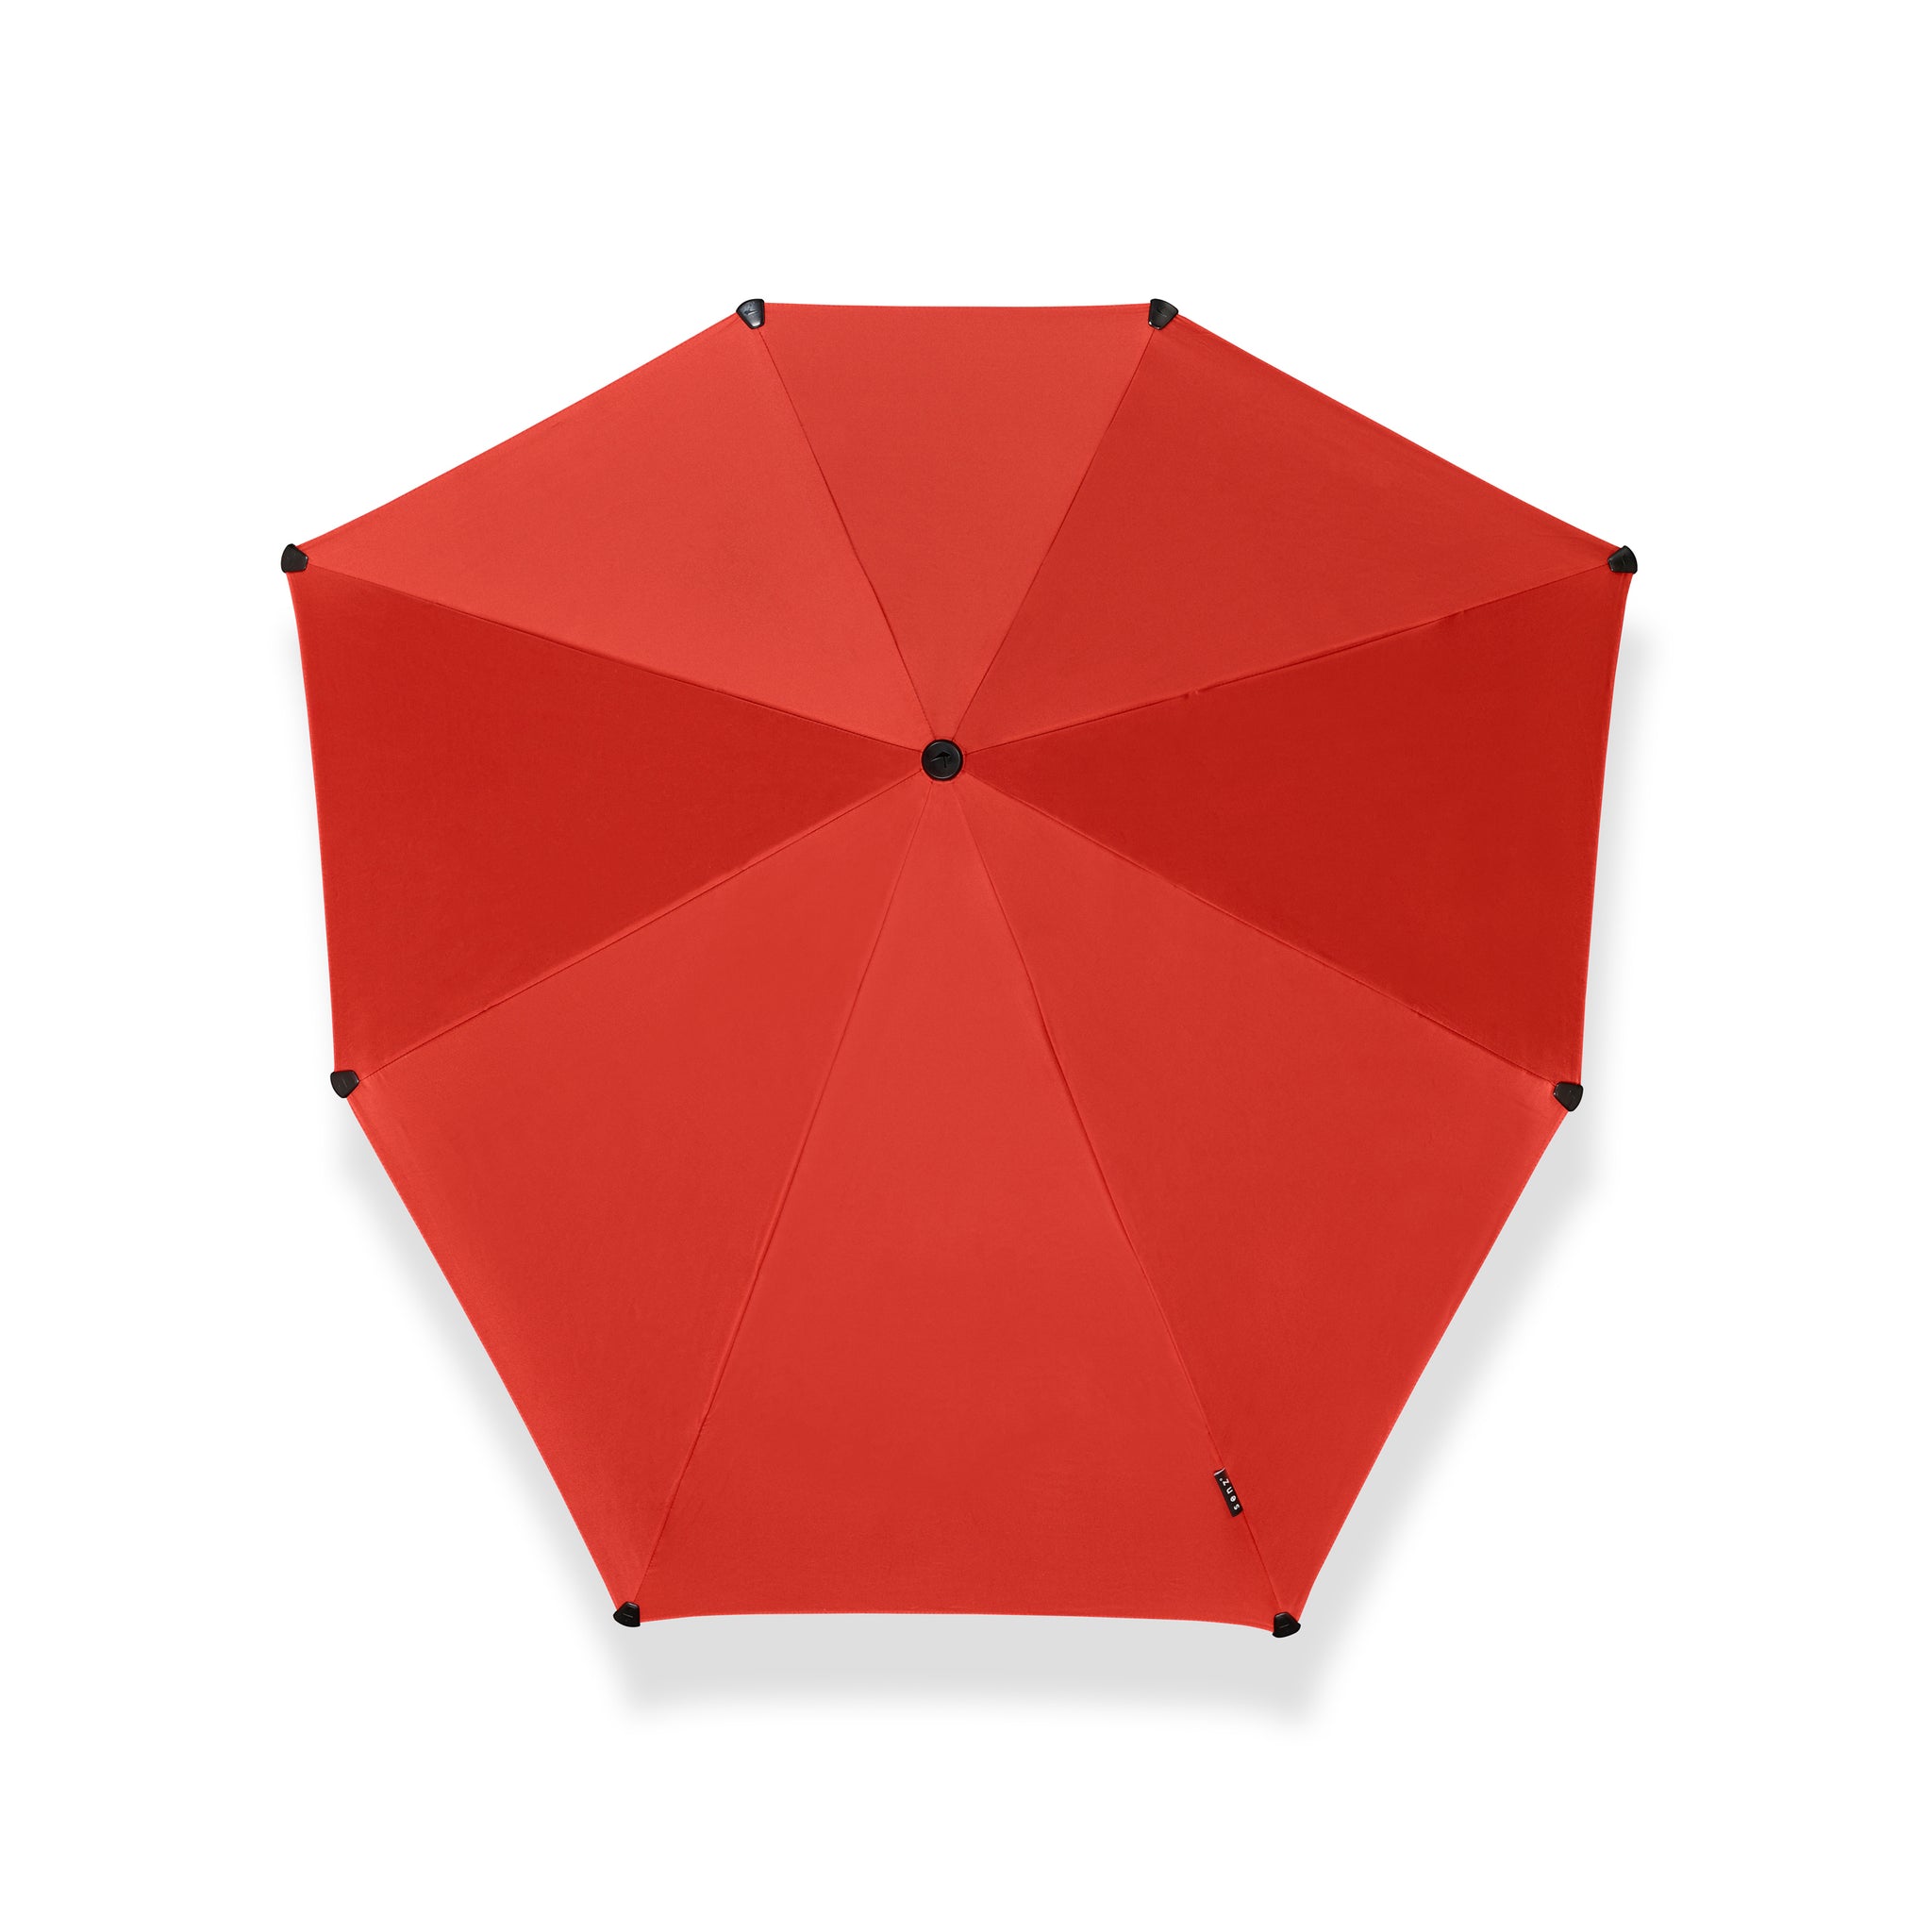 Senz Paraplu Original│Passion Red│Storm Paraplu│product foto bovenzijde